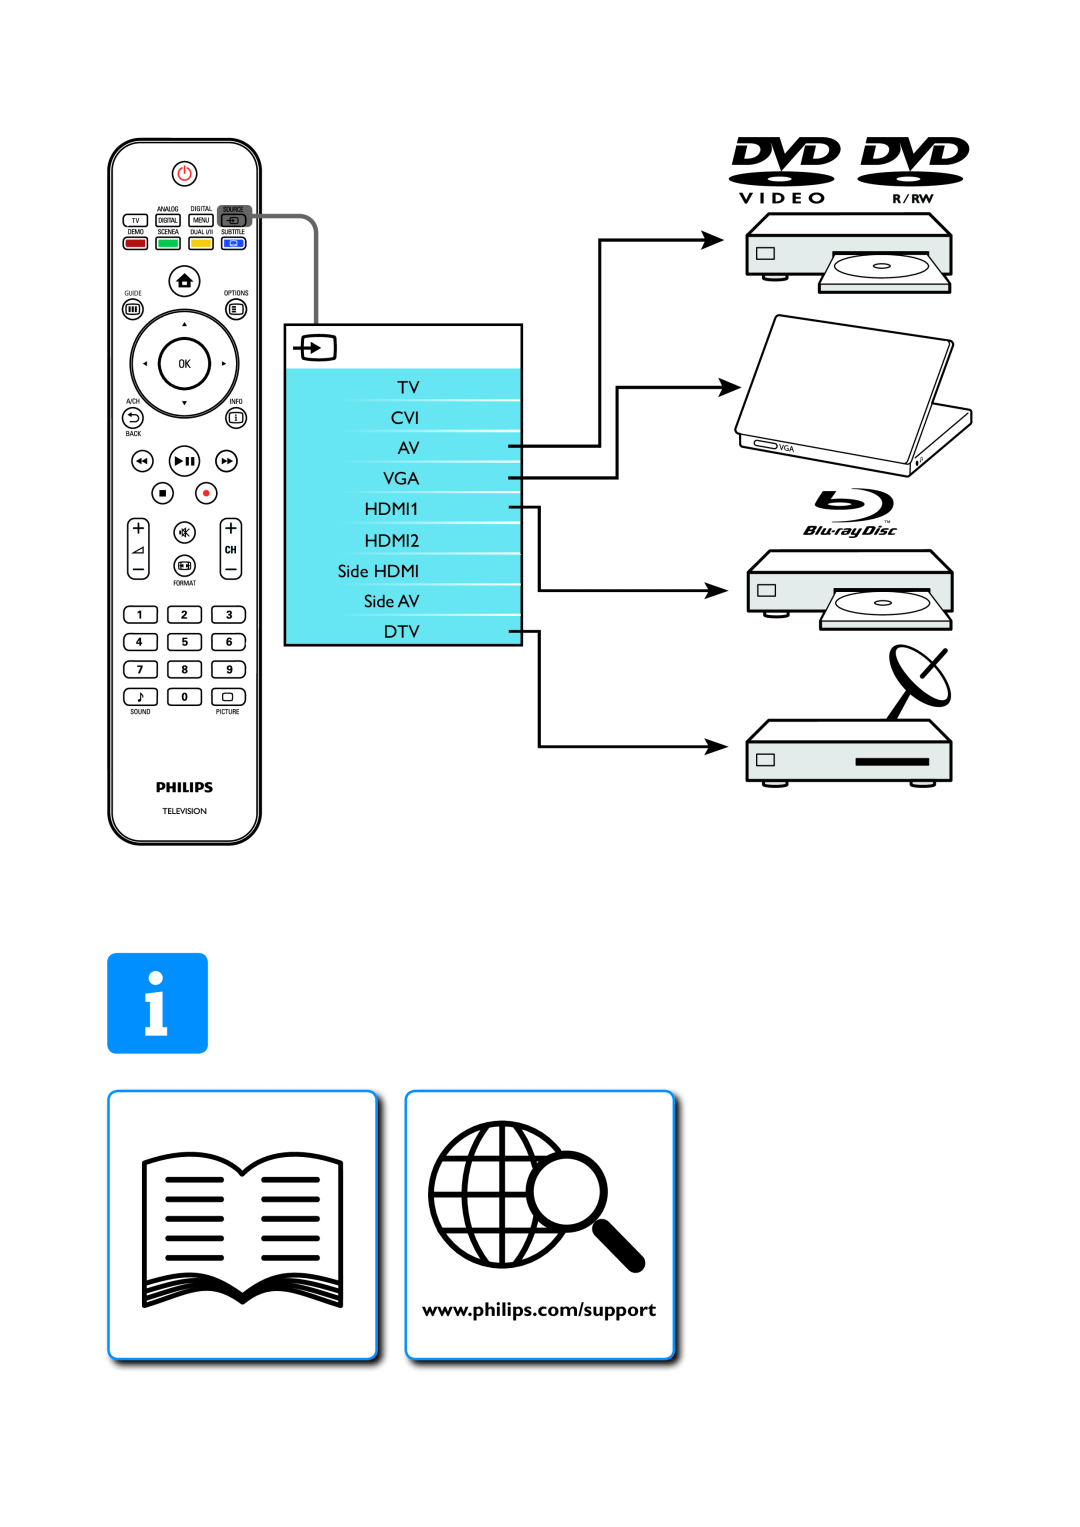 Philips 210 manual TV CVI AV VGA HDMI1 HDMI2 Side HDMI Side AV DTV, Guide 